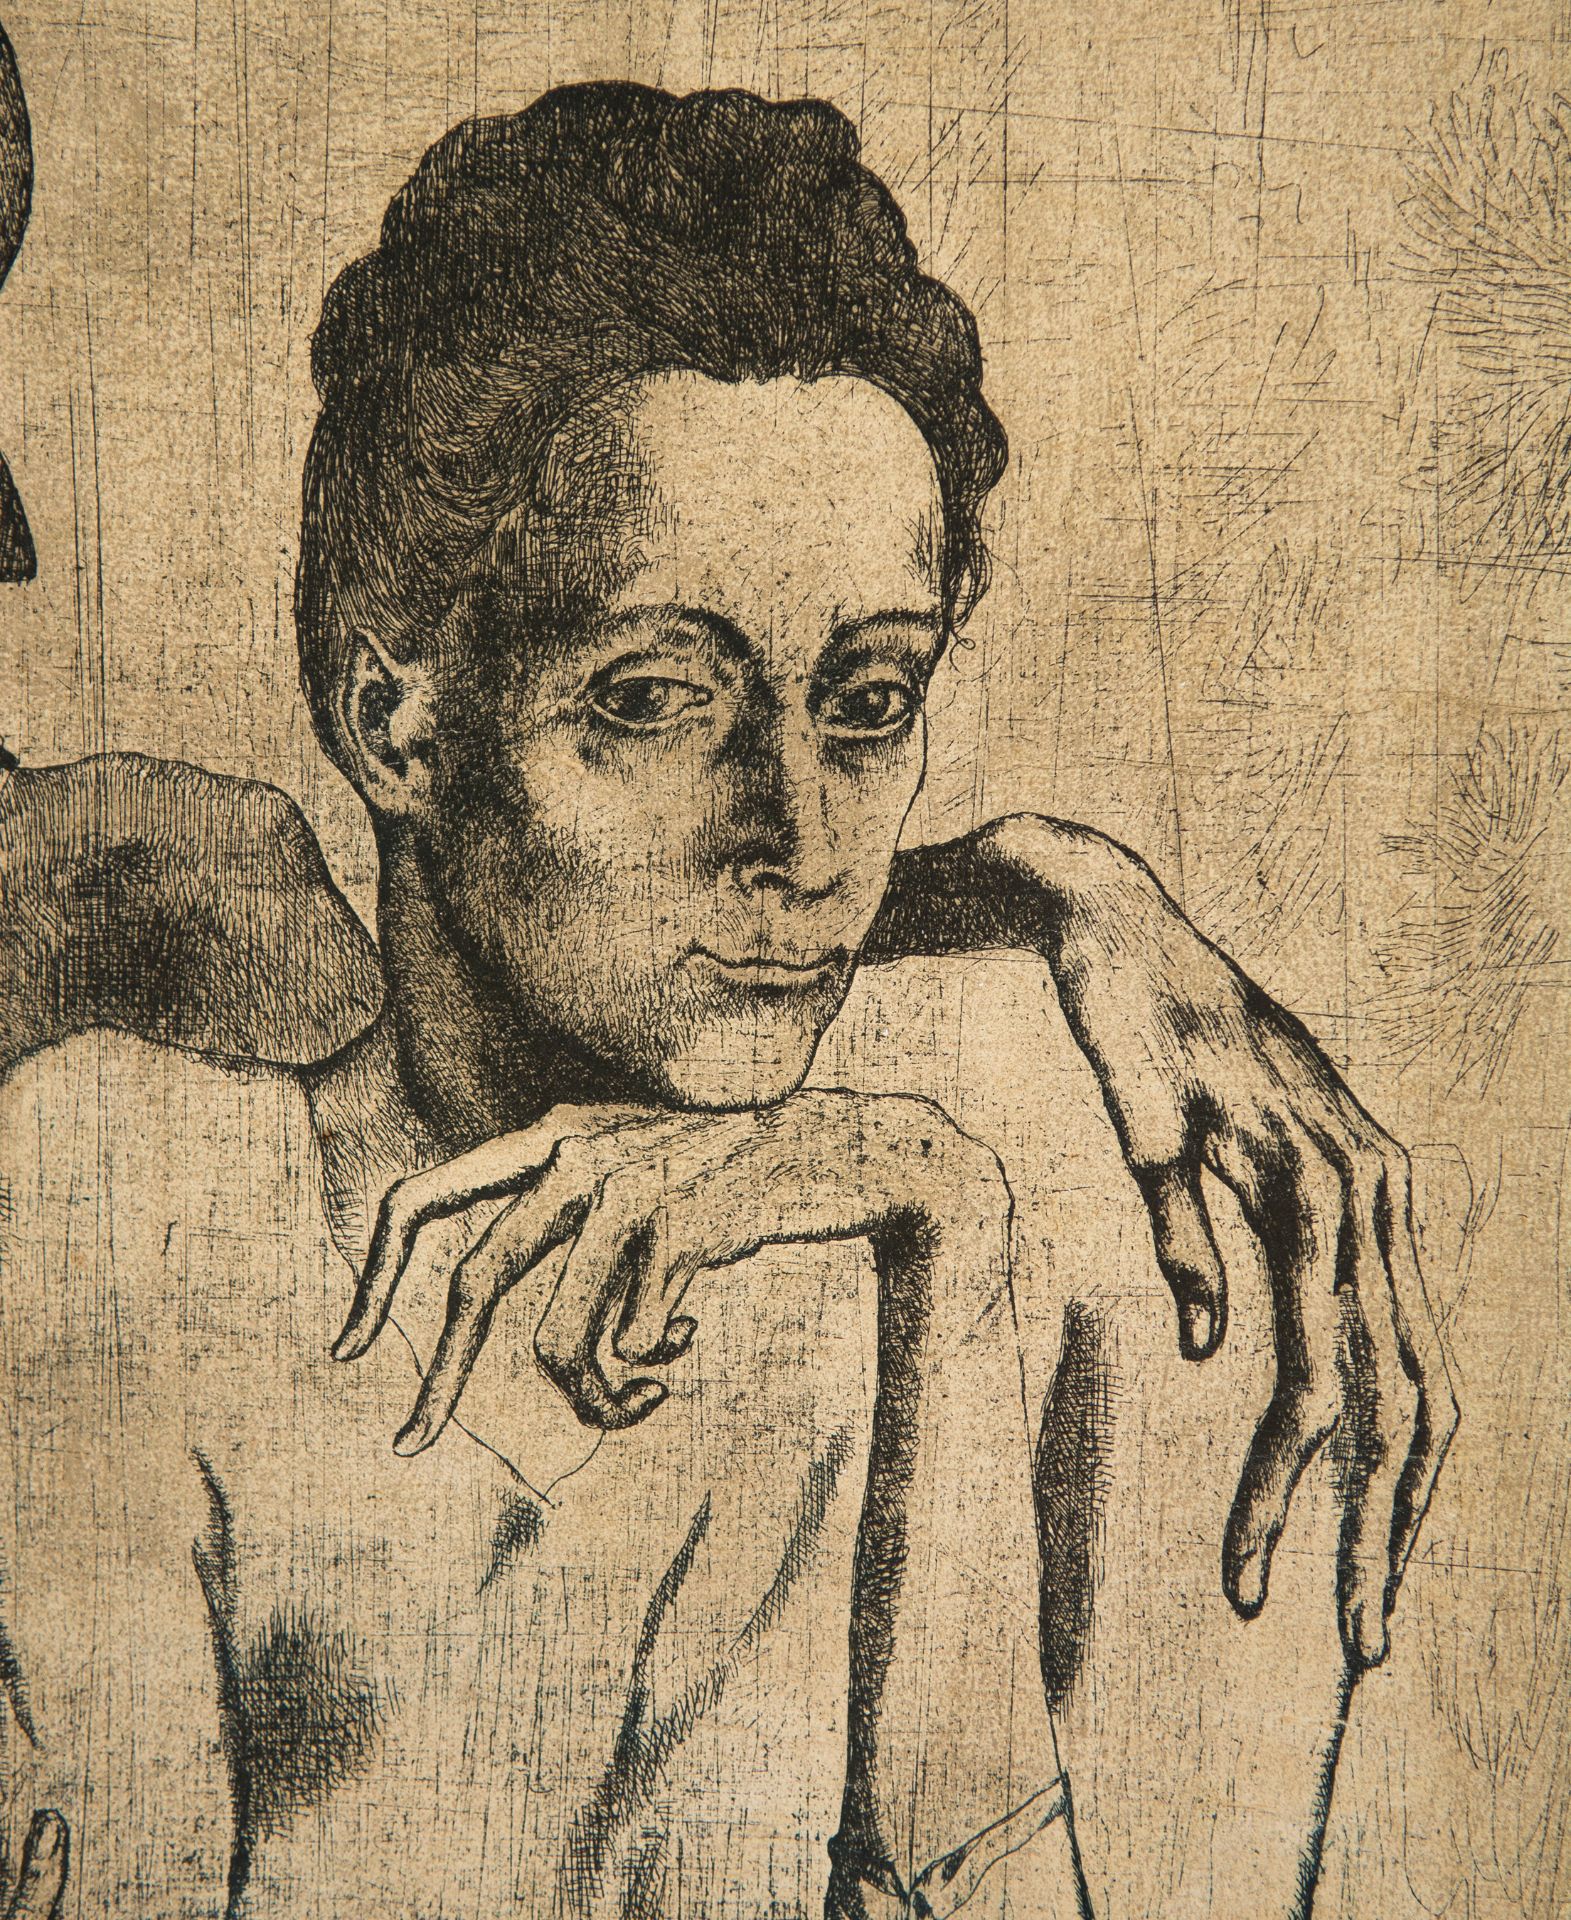 Pablo Ruiz Picasso (Malaga, 1881 - Mougins, 1973) - Image 2 of 8